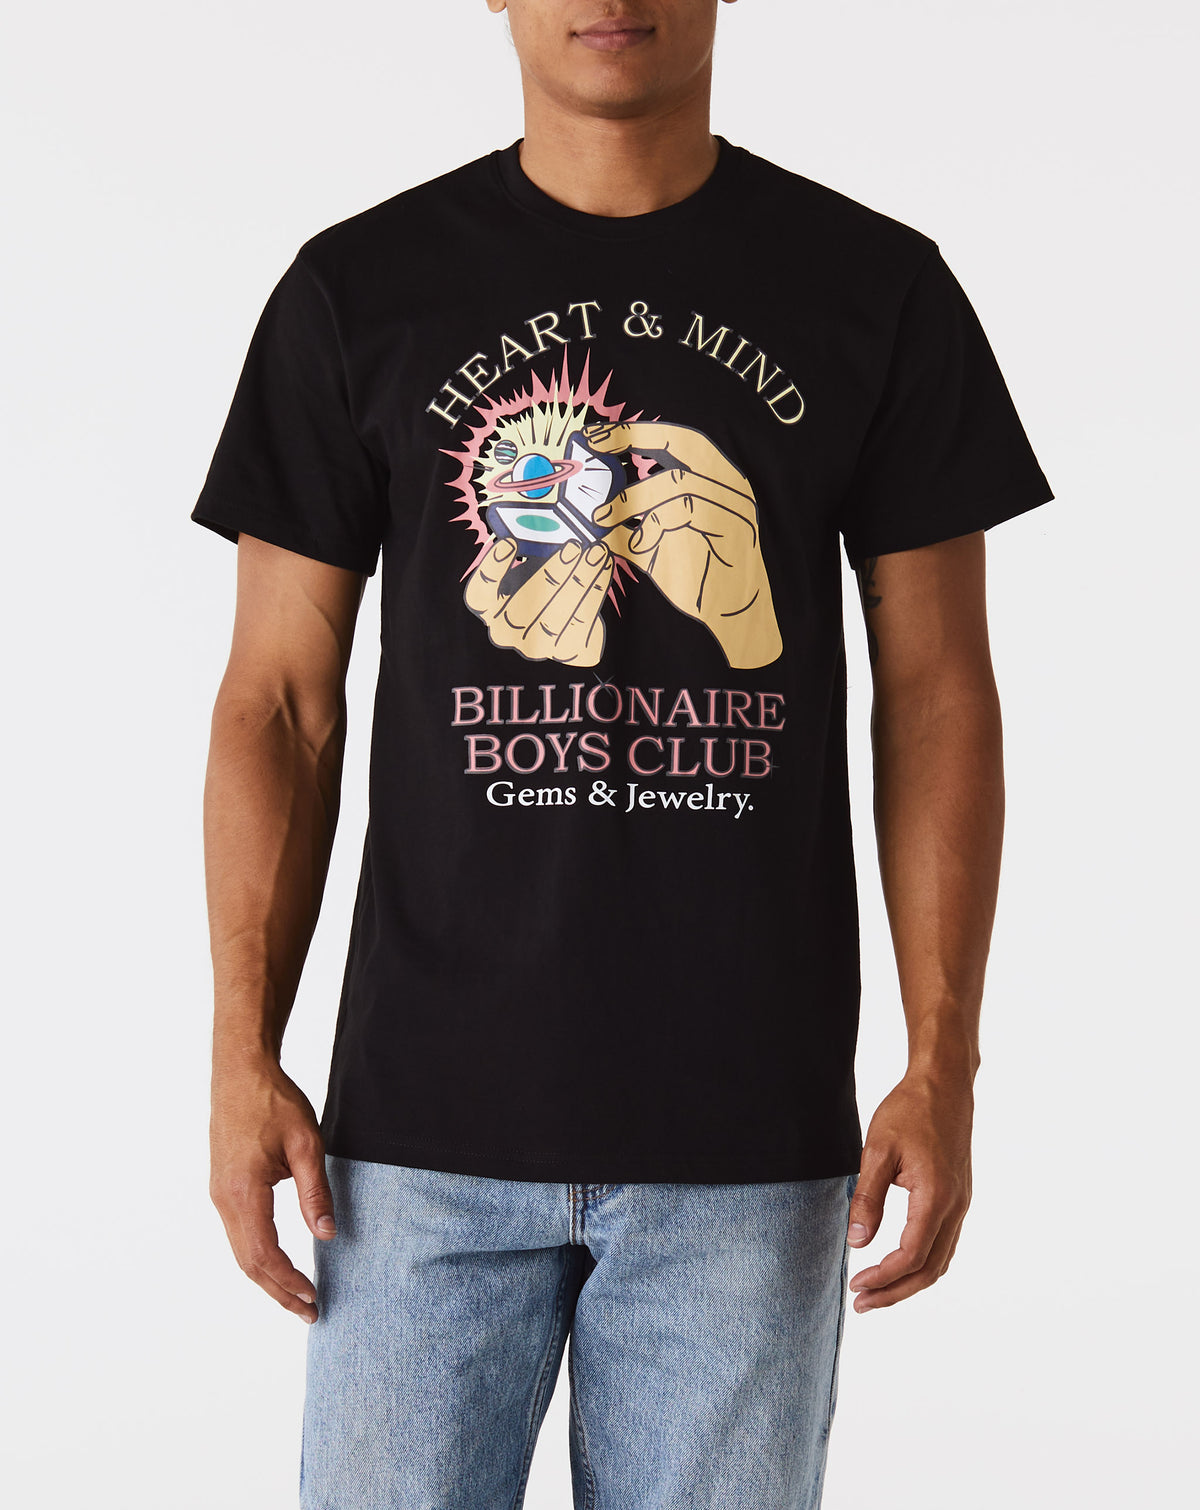 Billionaire Boys Club BB Gem and Jewelry T-Shirt - Rule of Next Apparel